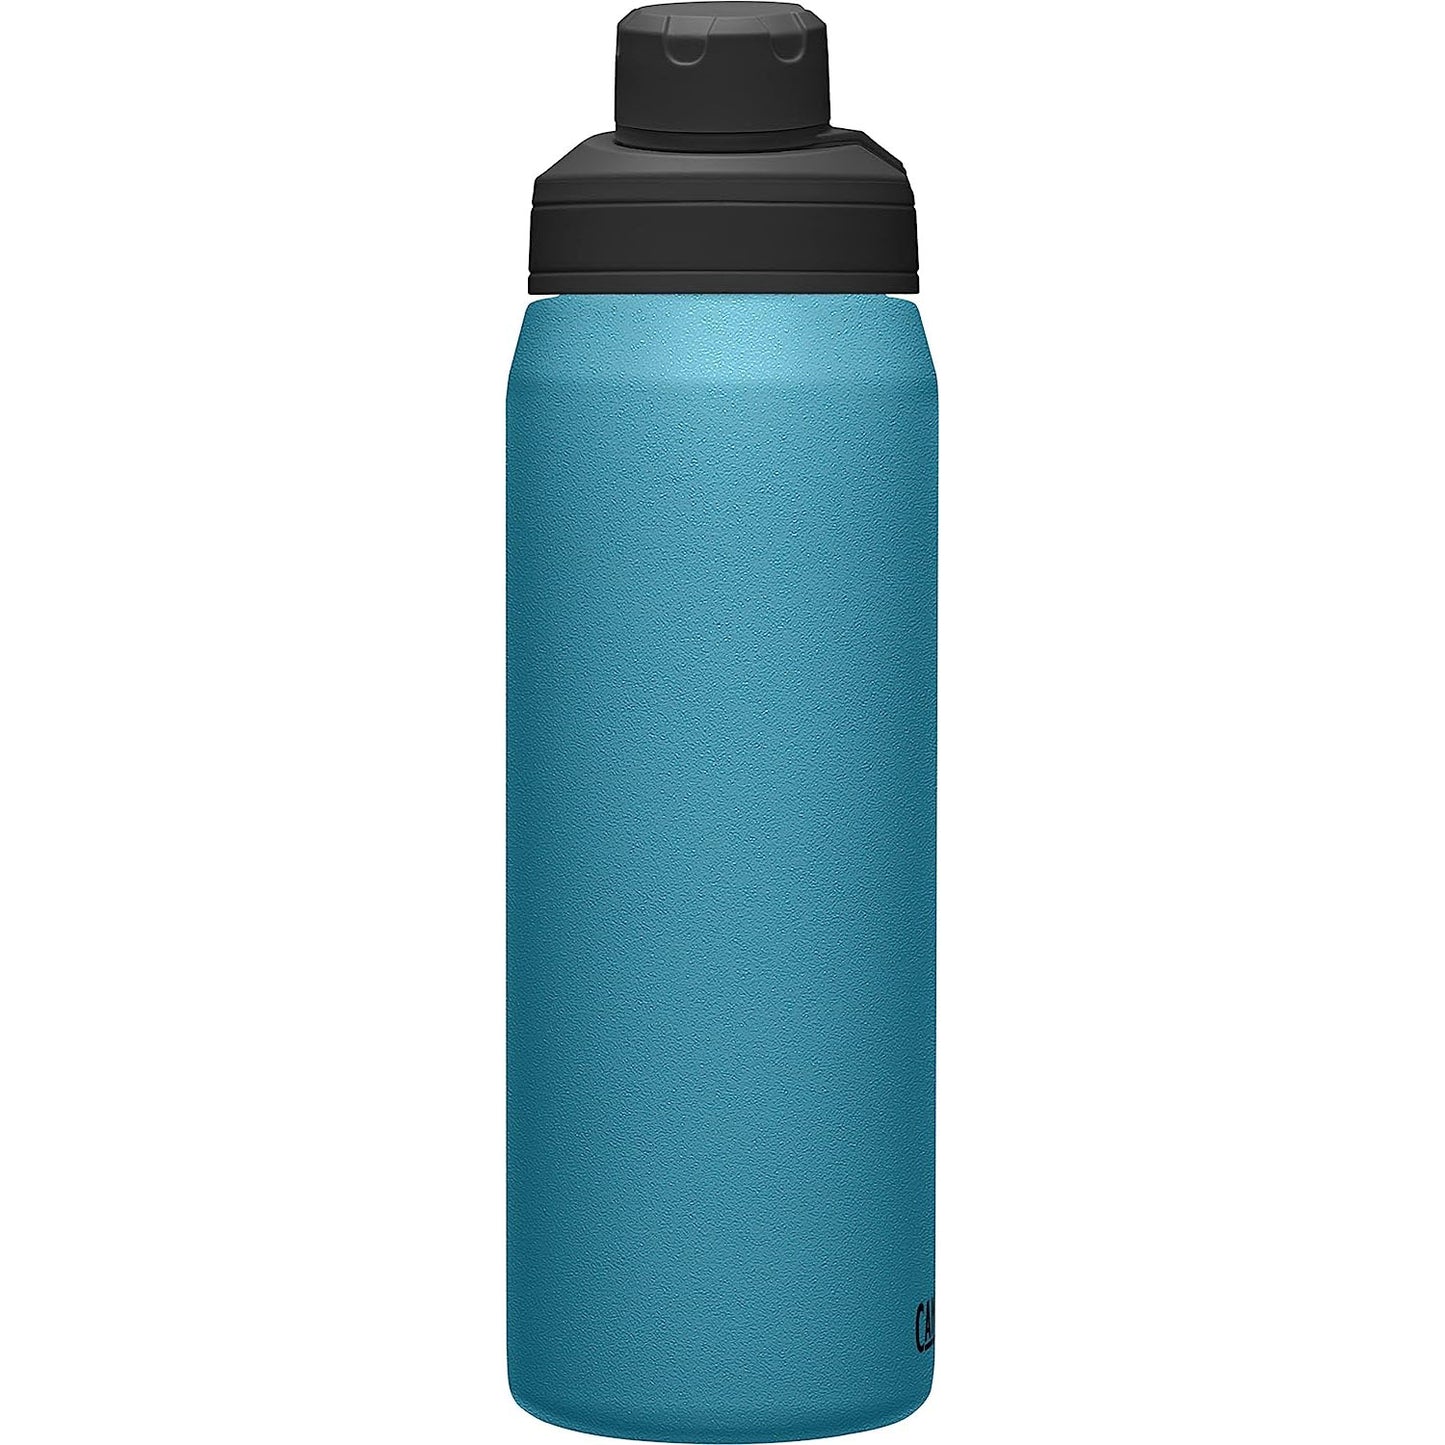 Camelbak Chute Mag SST Vacuum Insulated Bottle, 25oz/750ML - Best Price online Prokicksports.com